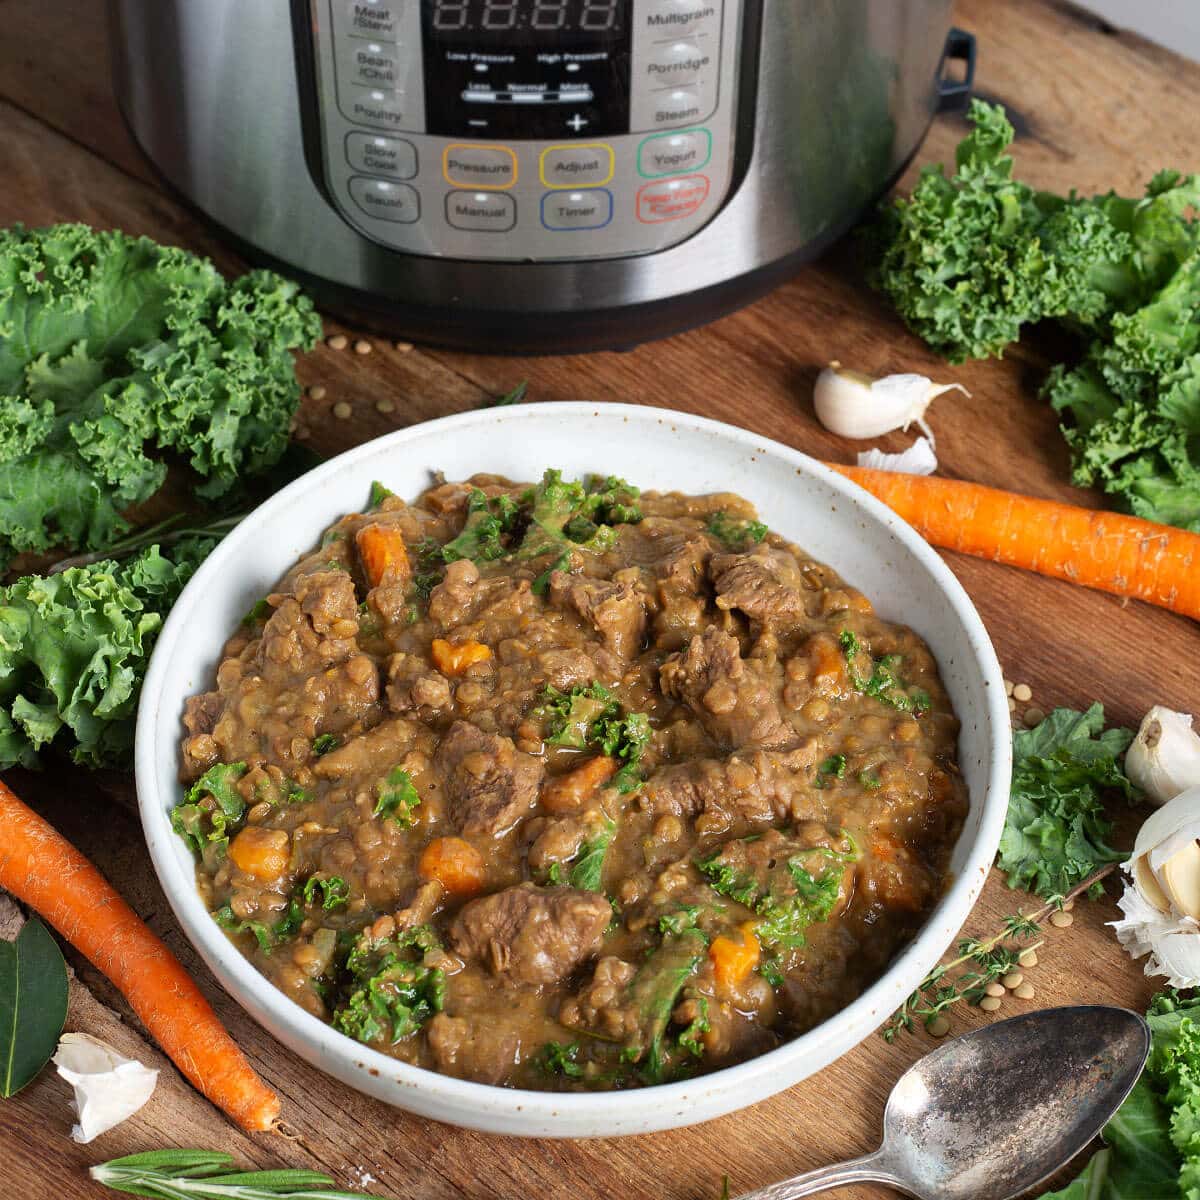 https://www.simplyhappyfoodie.com/wp-content/uploads/2021/09/instant-pot-lentil-beef-stew-featured.jpg